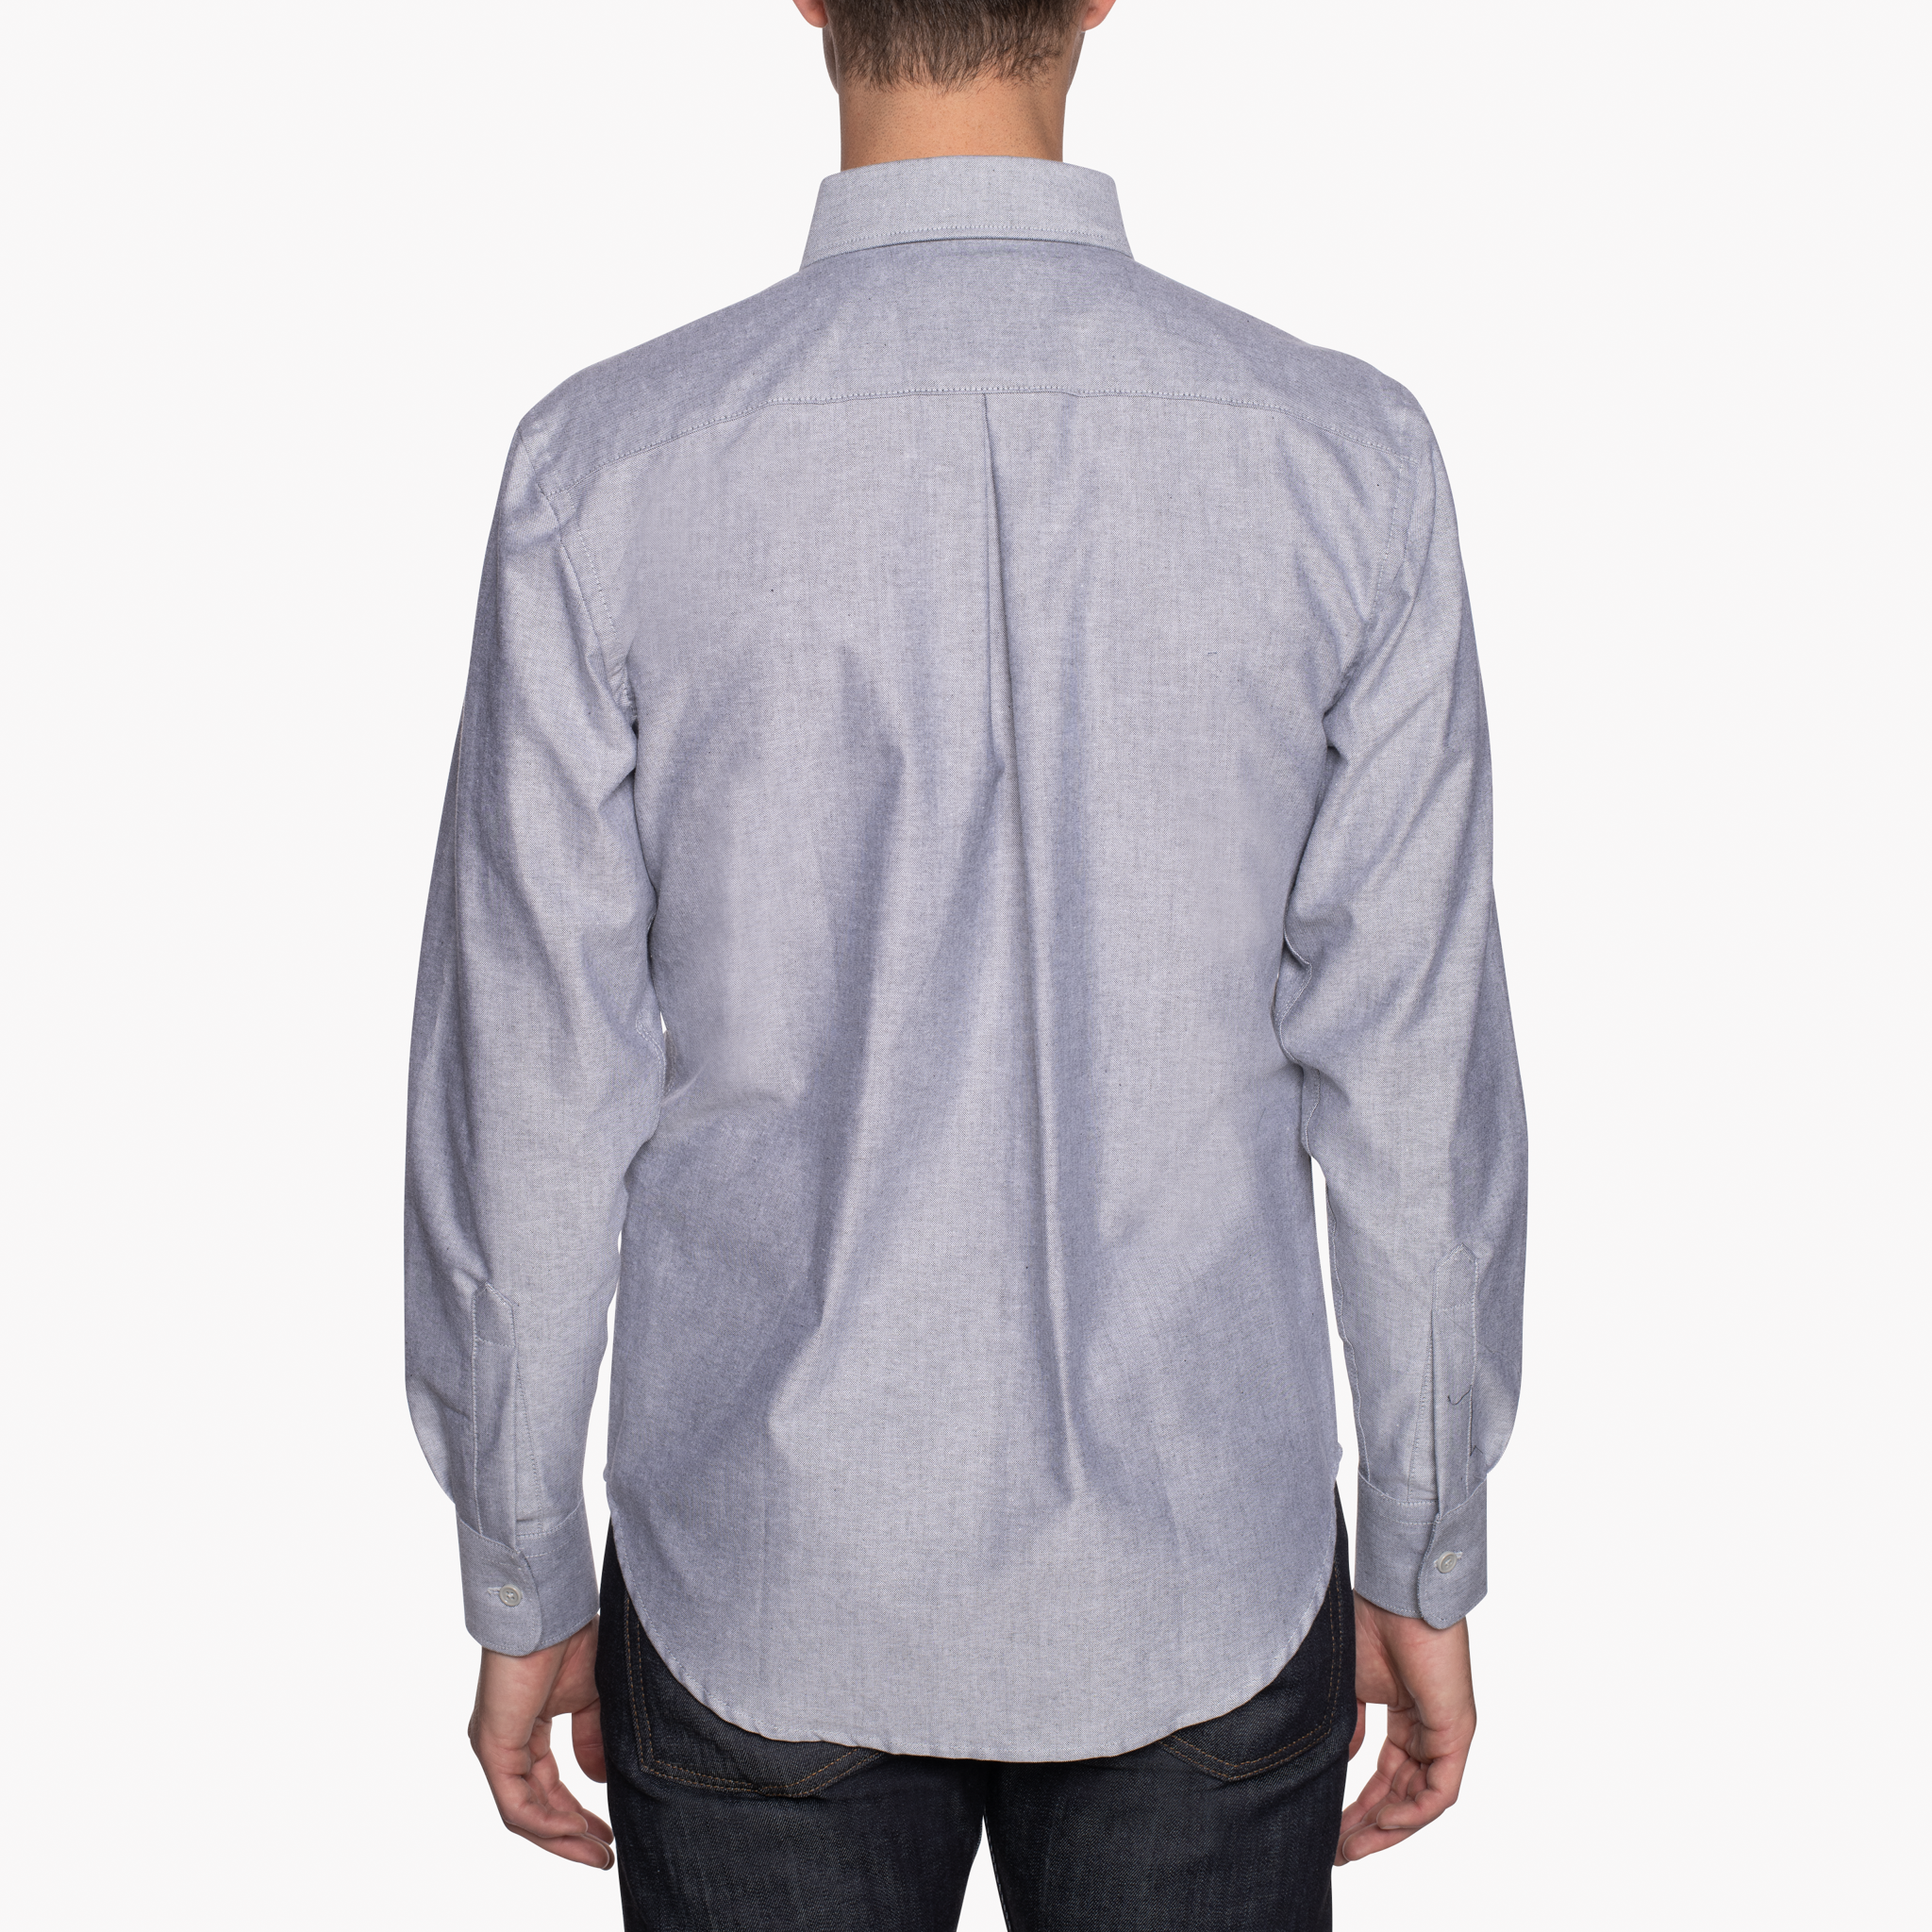  Easy Shirt - Cotton Oxford - black - back 